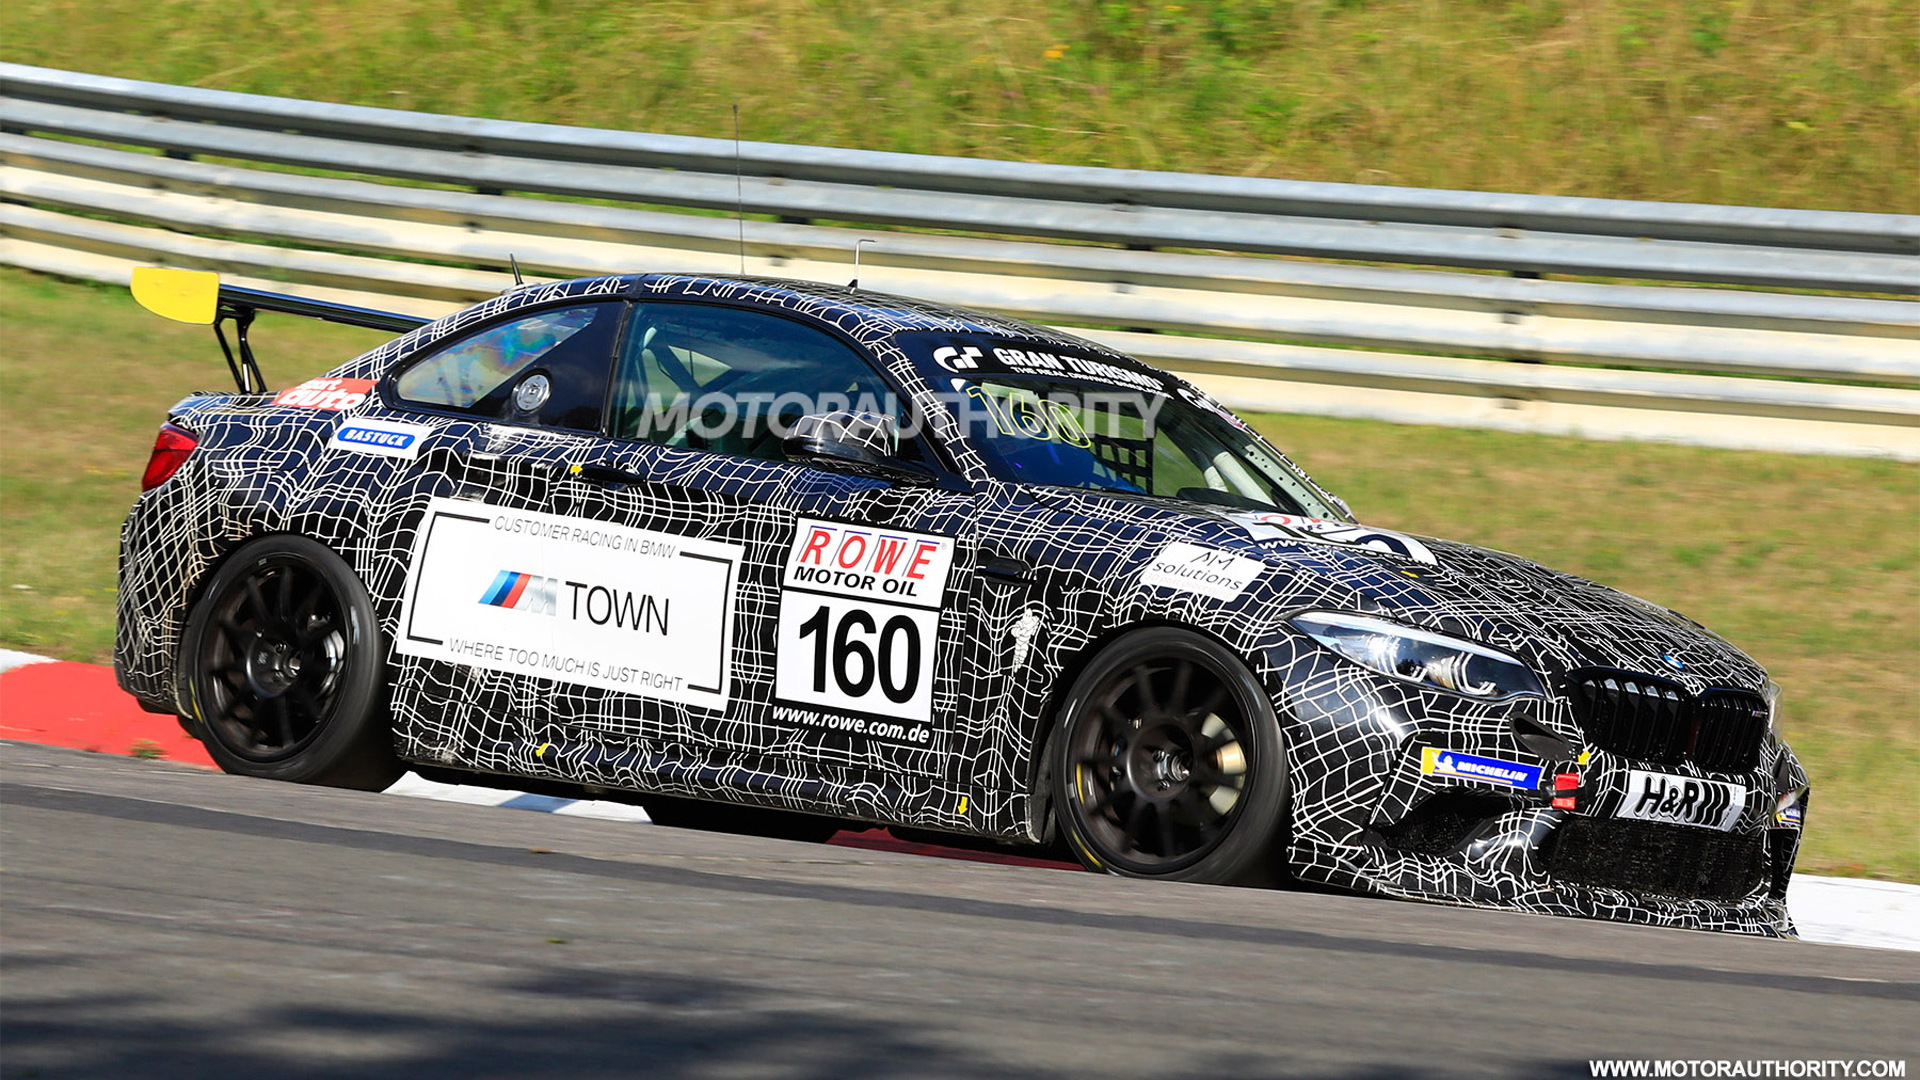 2020 BMW M2 Competition-based race car - Image via S. Baldauf/SB-Medien